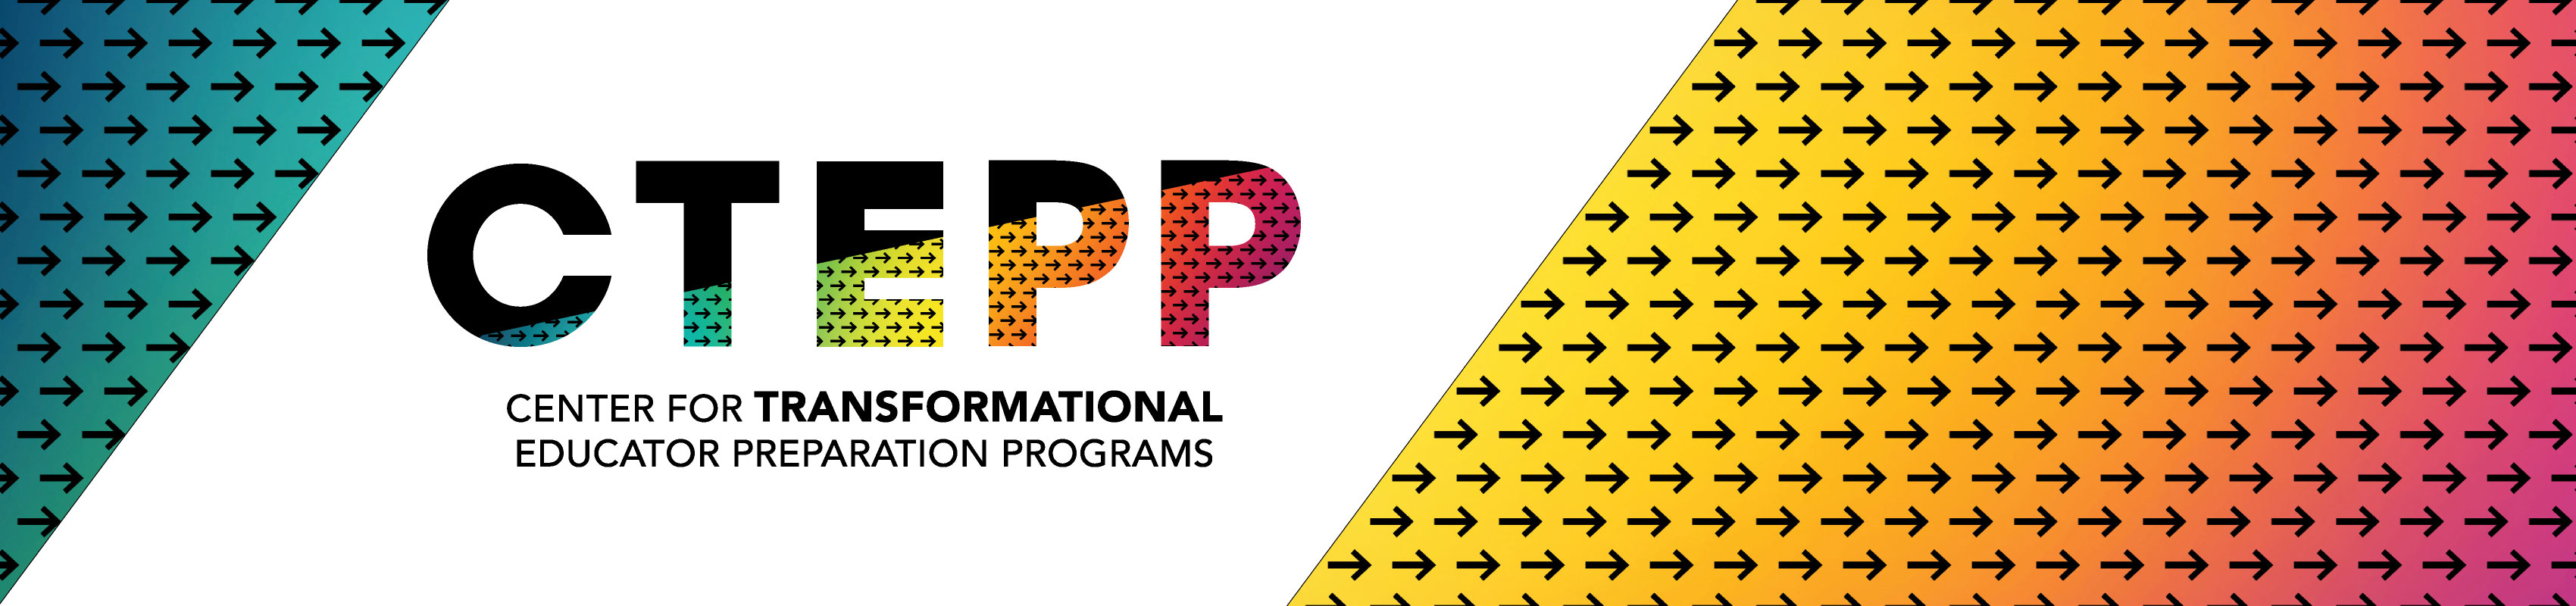 CTEPP Center for Transformational Educator Preparation Programs